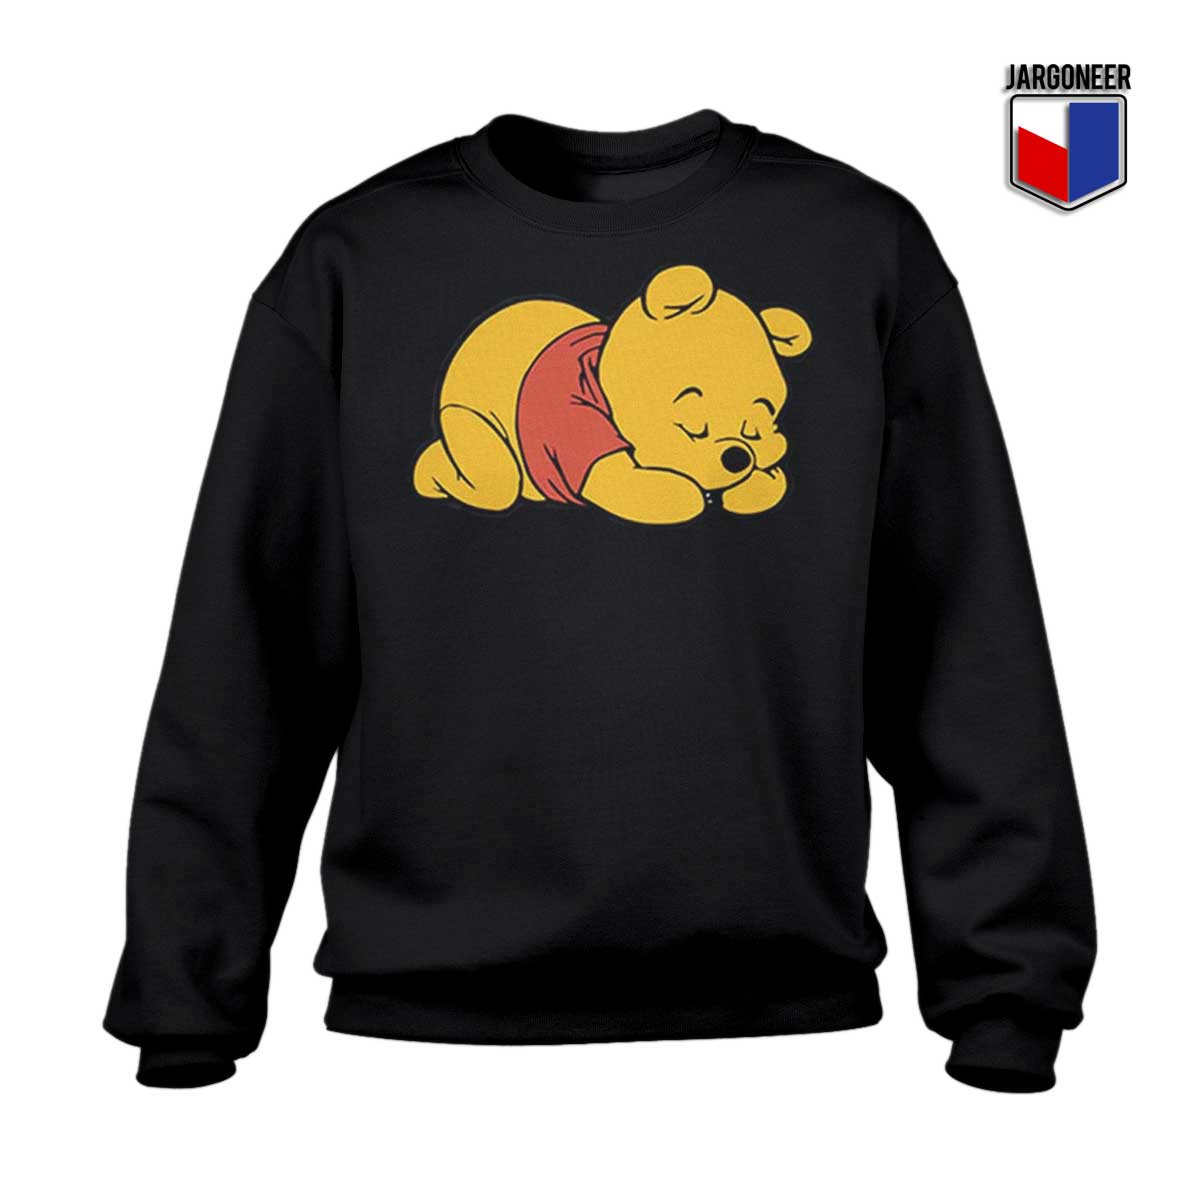 Winnie the Pooh Cartoon Sweatshirt - Shop Unique Graphic Cool Shirt Designs